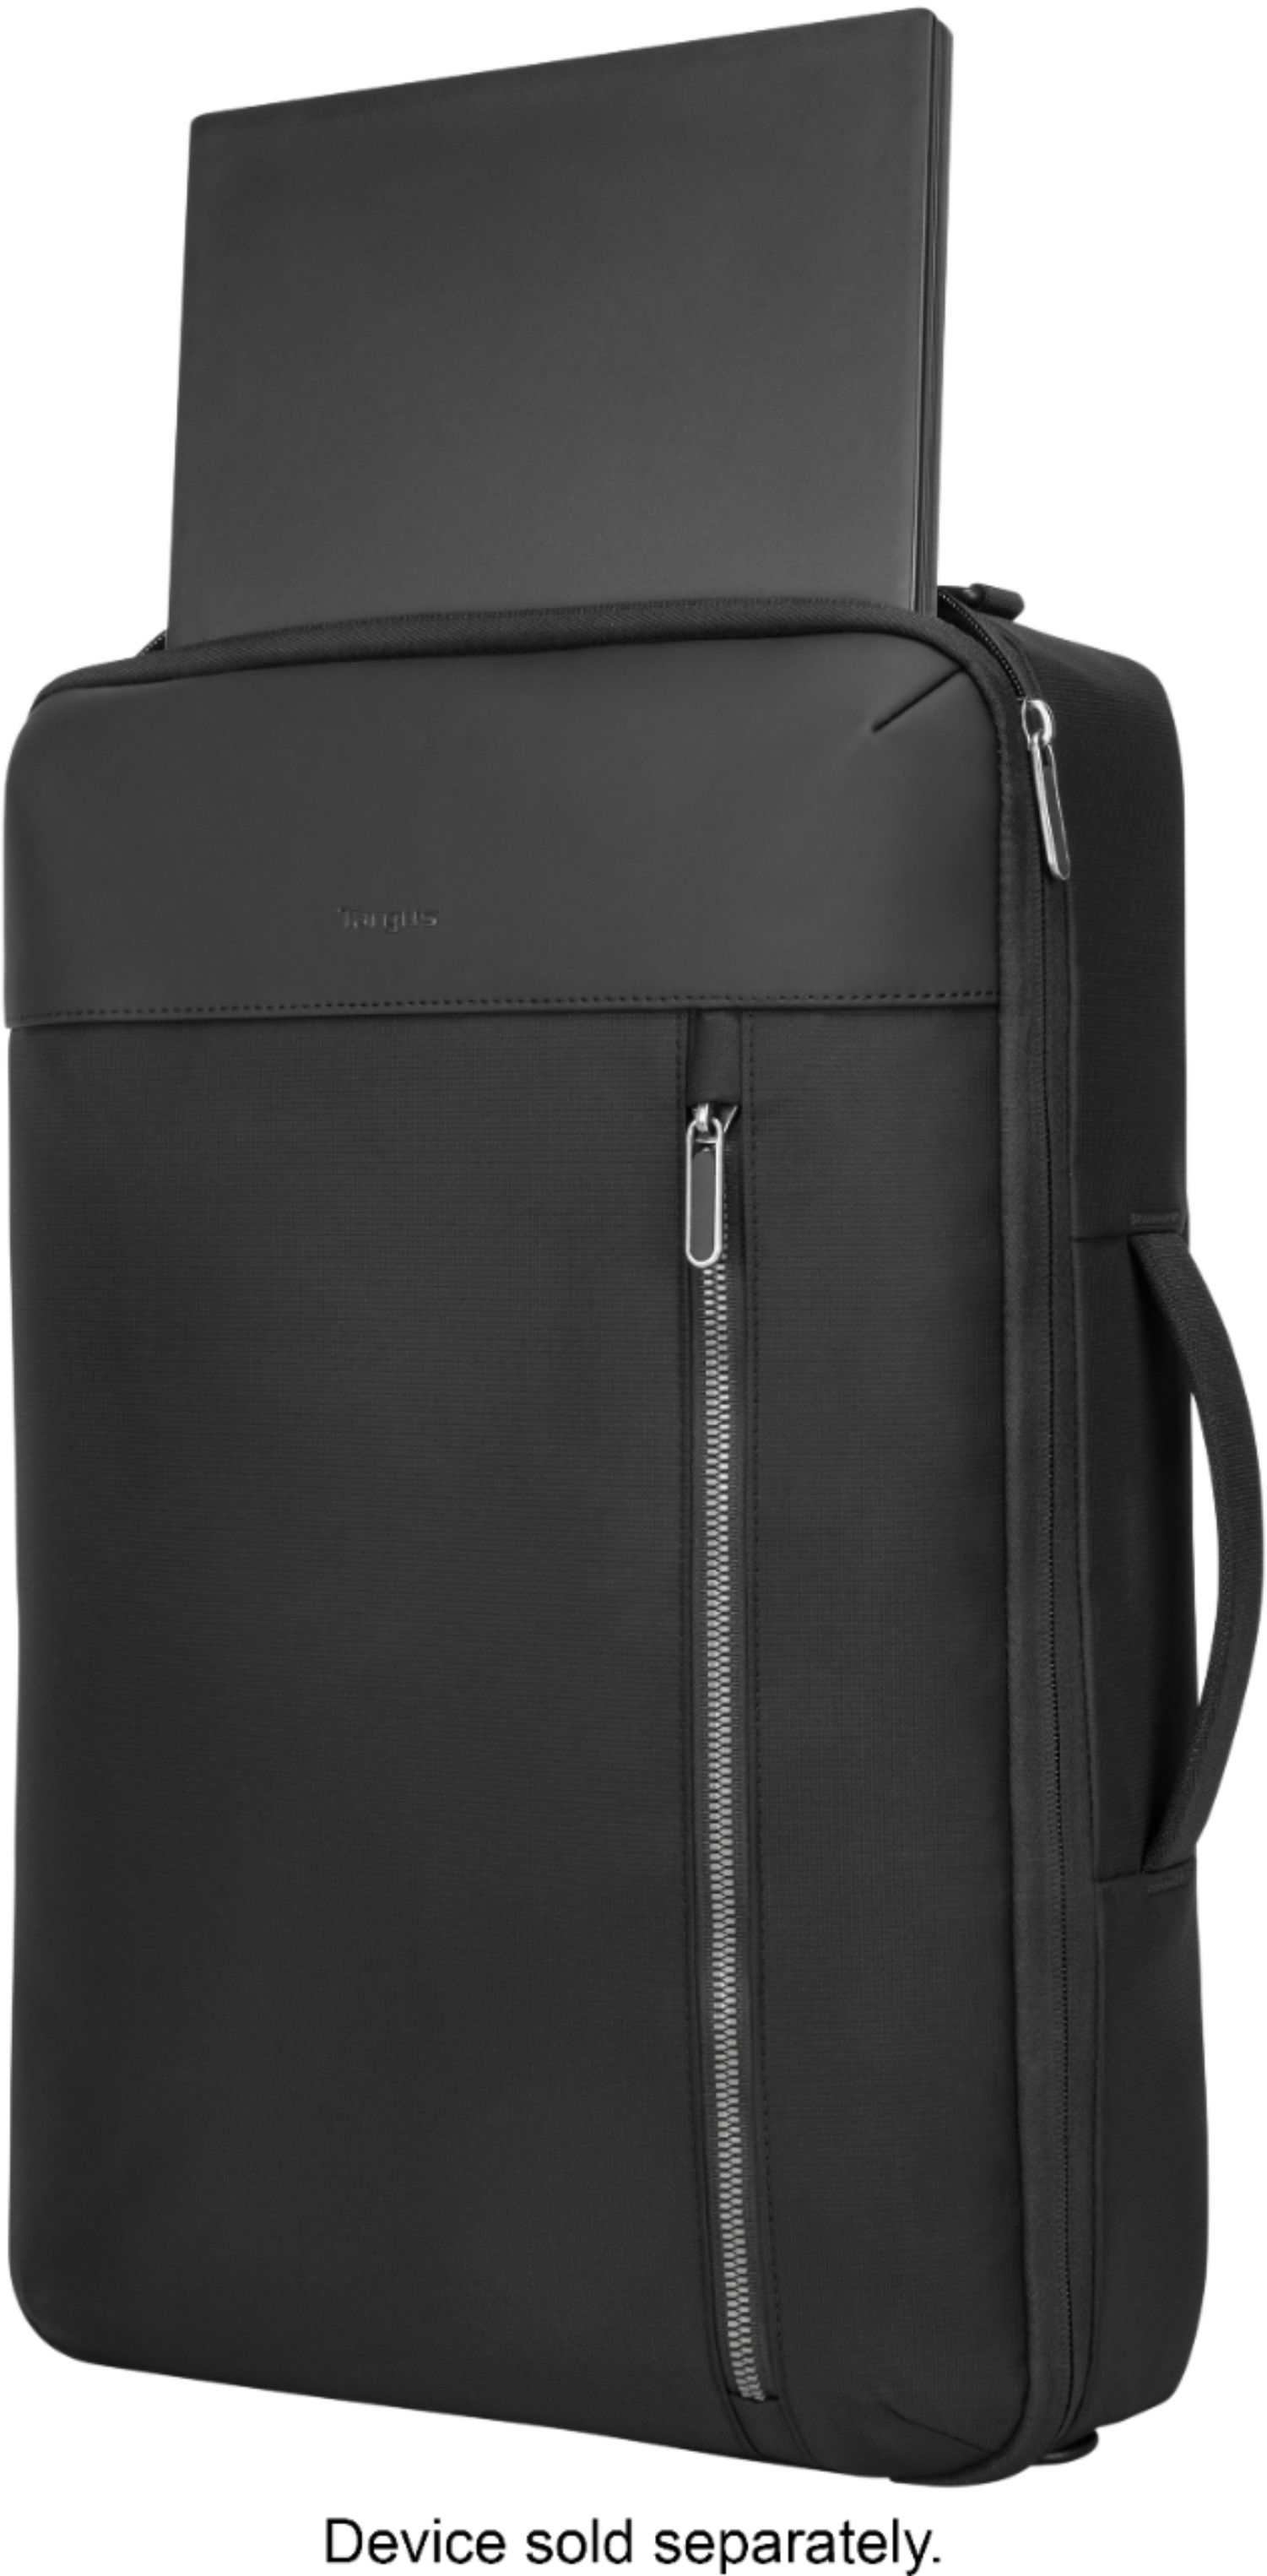 Black Convertible Backpack